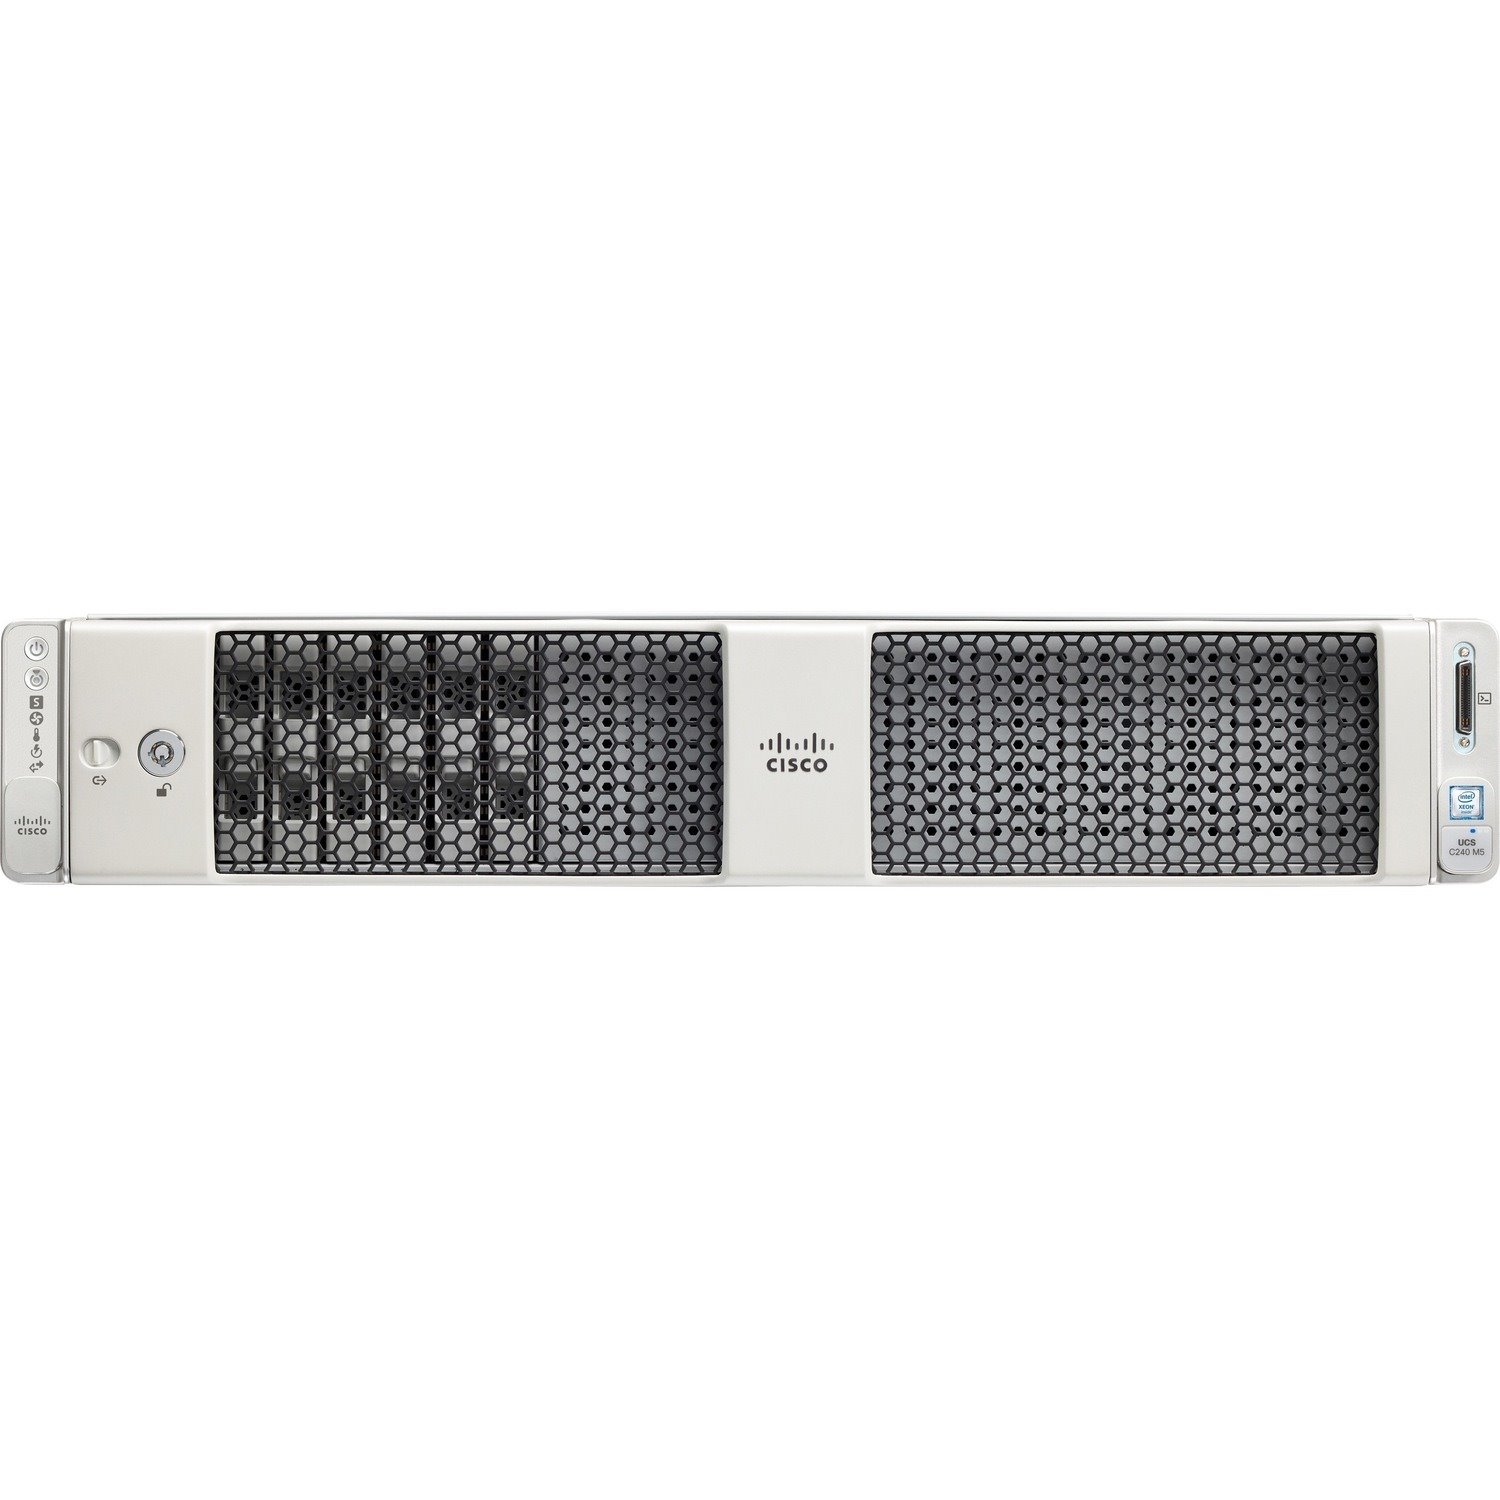 Cisco C240 M5 2U Rack-mountable Server - 1 x Intel Xeon Silver 4110 2.10 GHz - 16 GB RAM - 12Gb/s SAS Controller